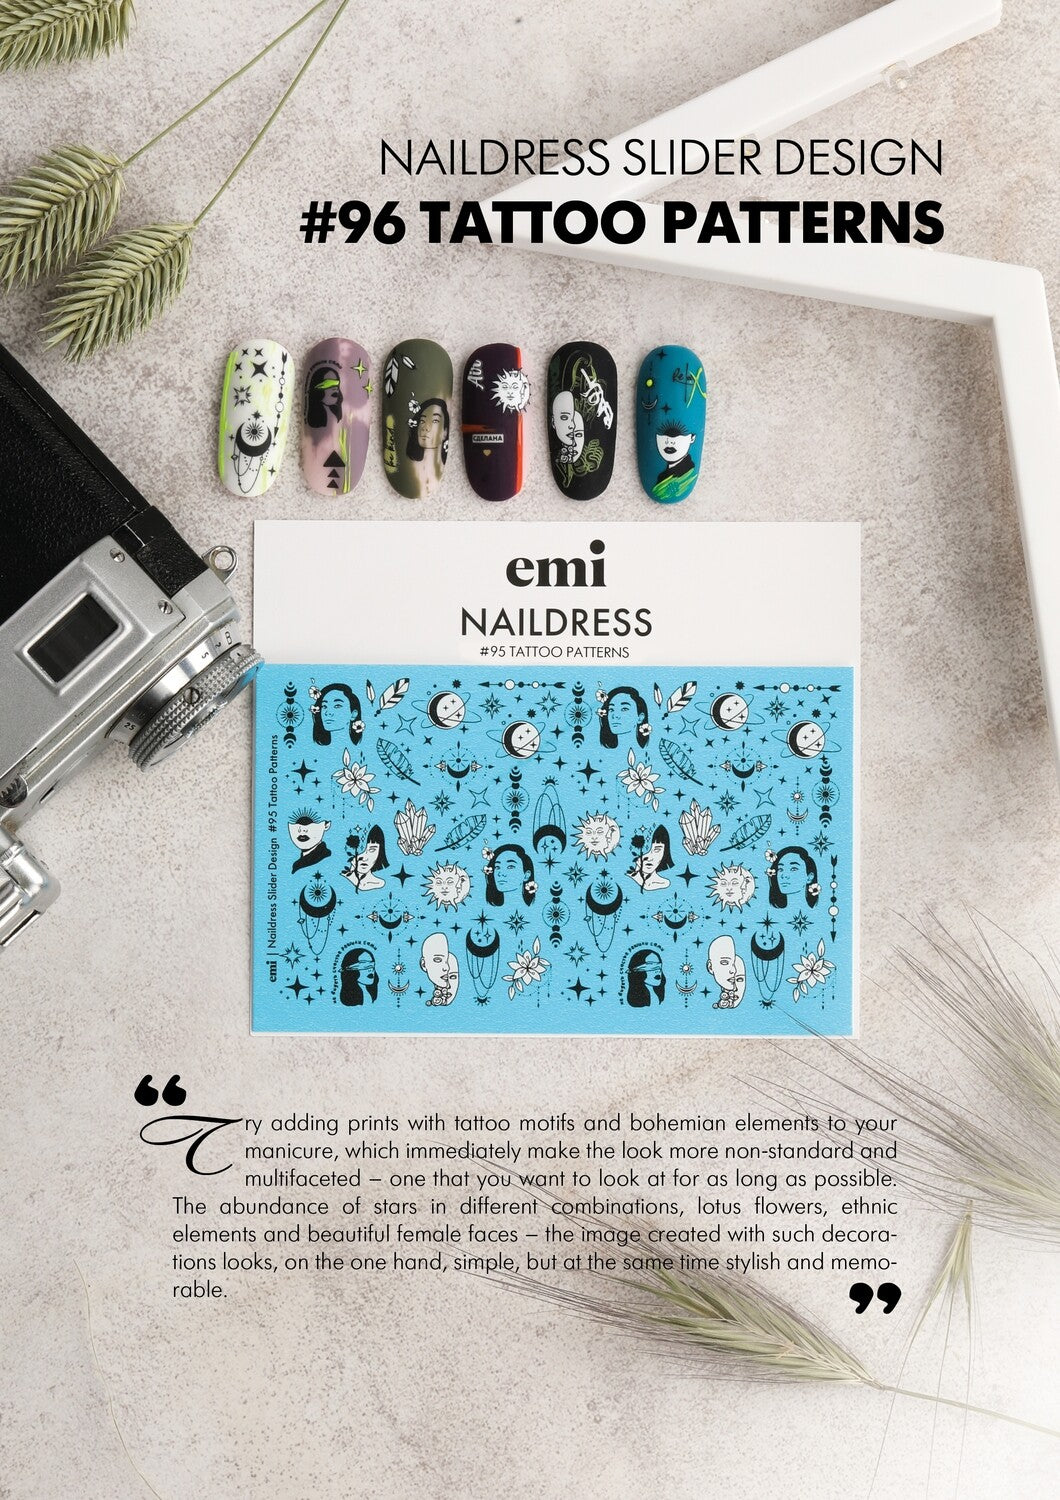 Naildress Slider Design #96 Tattoo patterns